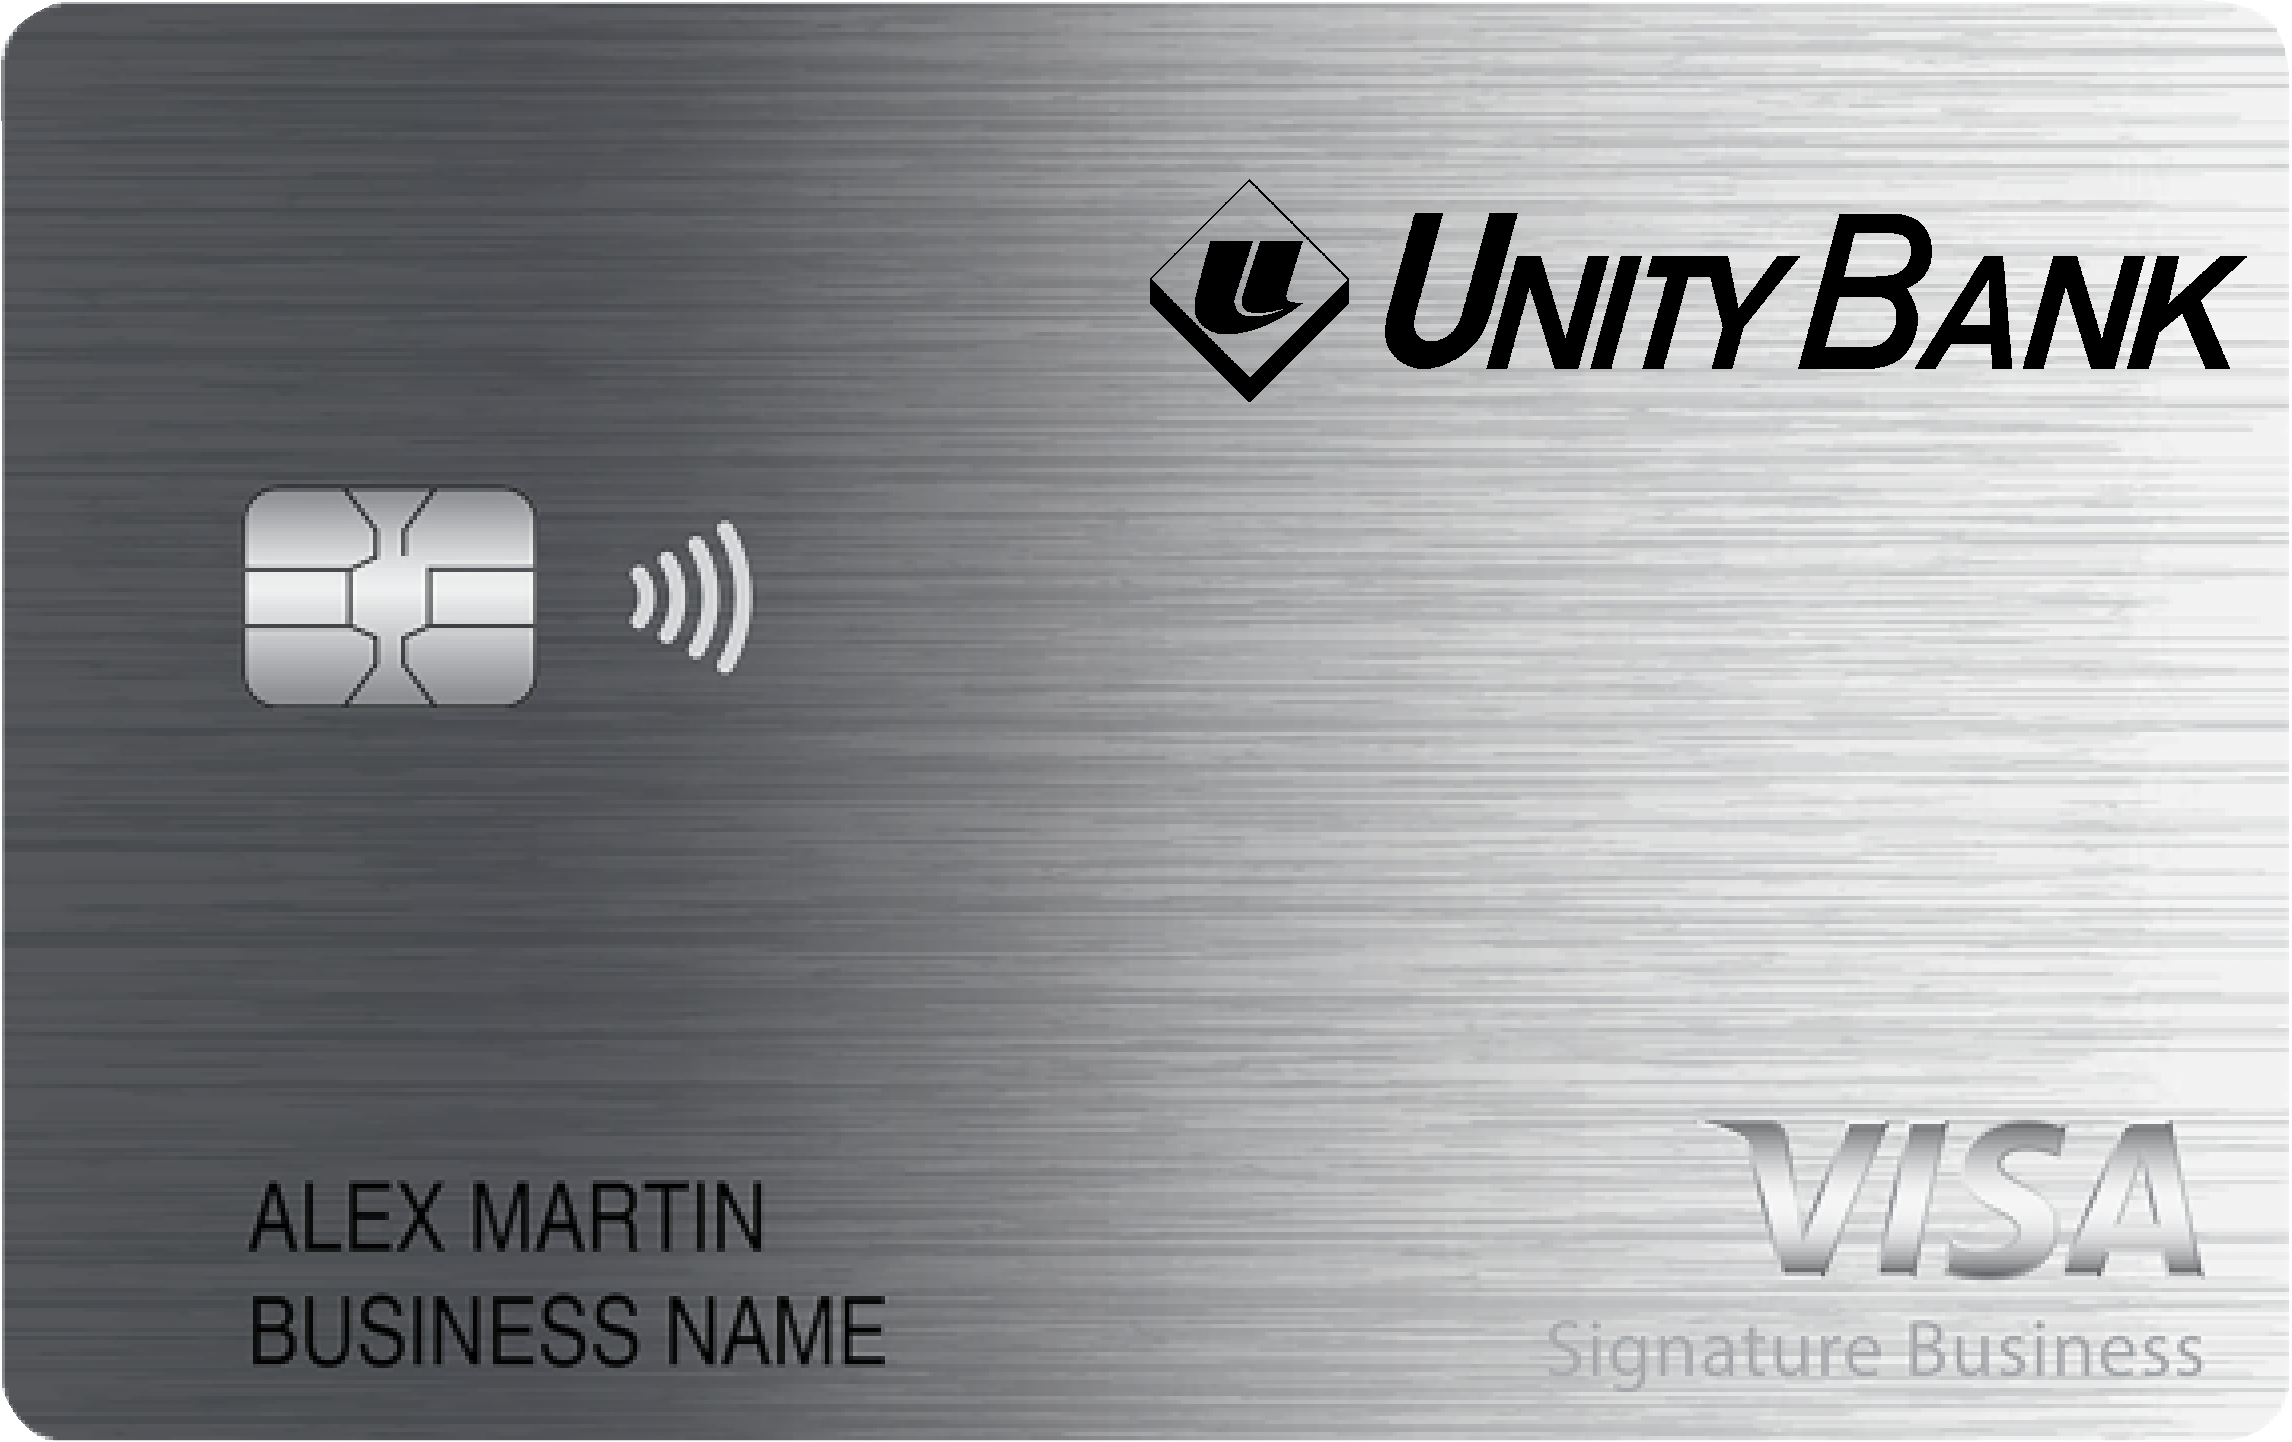 Unity Bank Smart Business Rewards Card